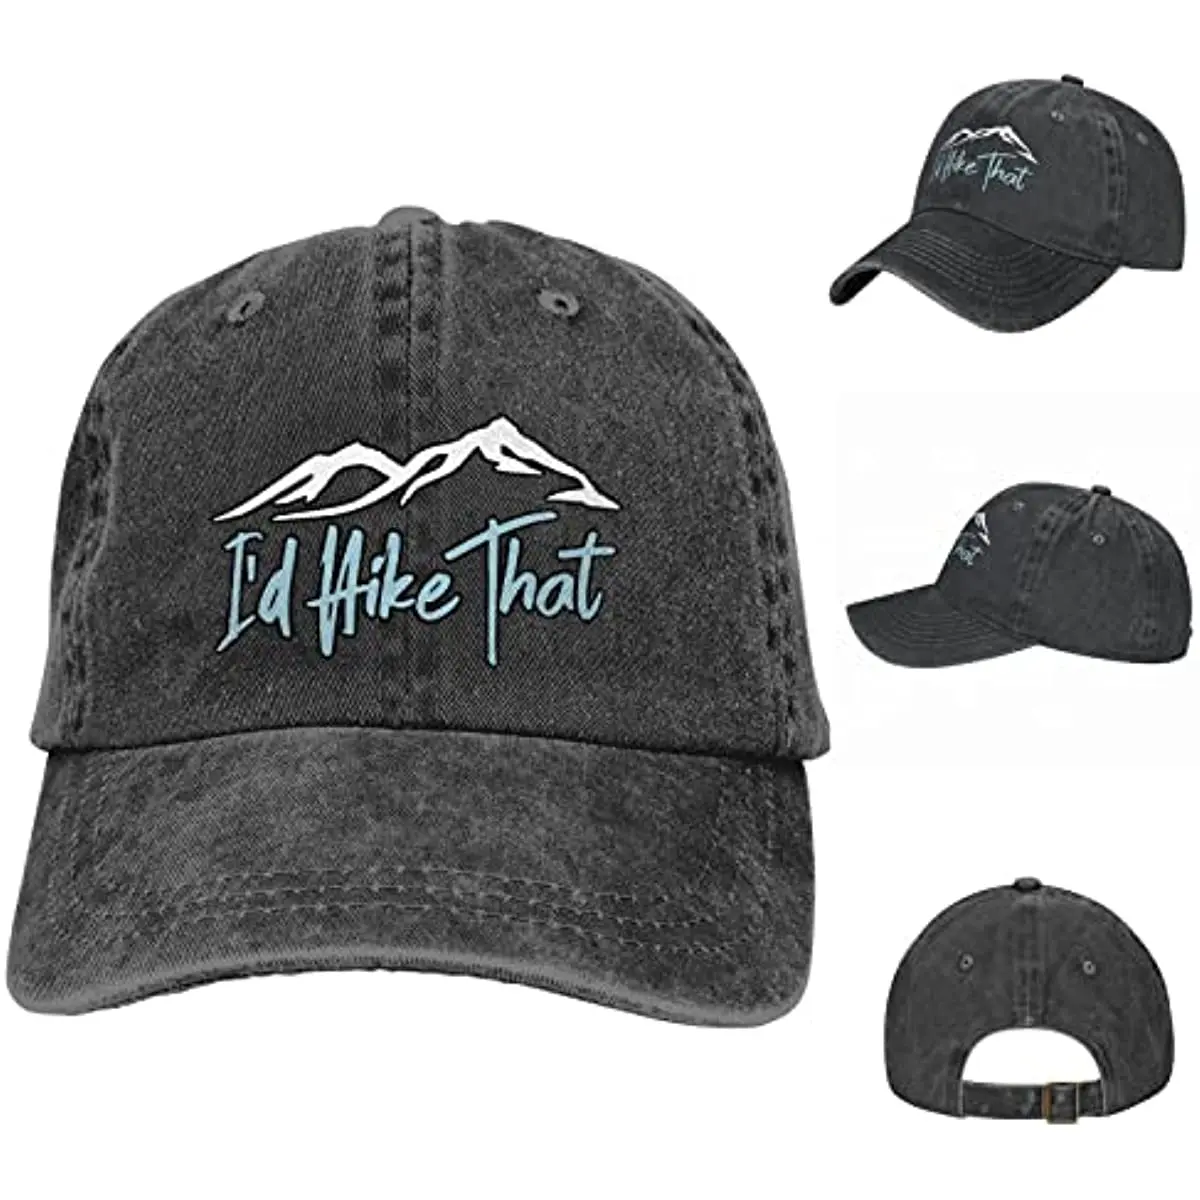 

I'd Like That Baseball Cap Cowboy Hat Adjustable Vintage Funny Peaked Caps for Women Men Outdoor Sport Trucker Hats Casual